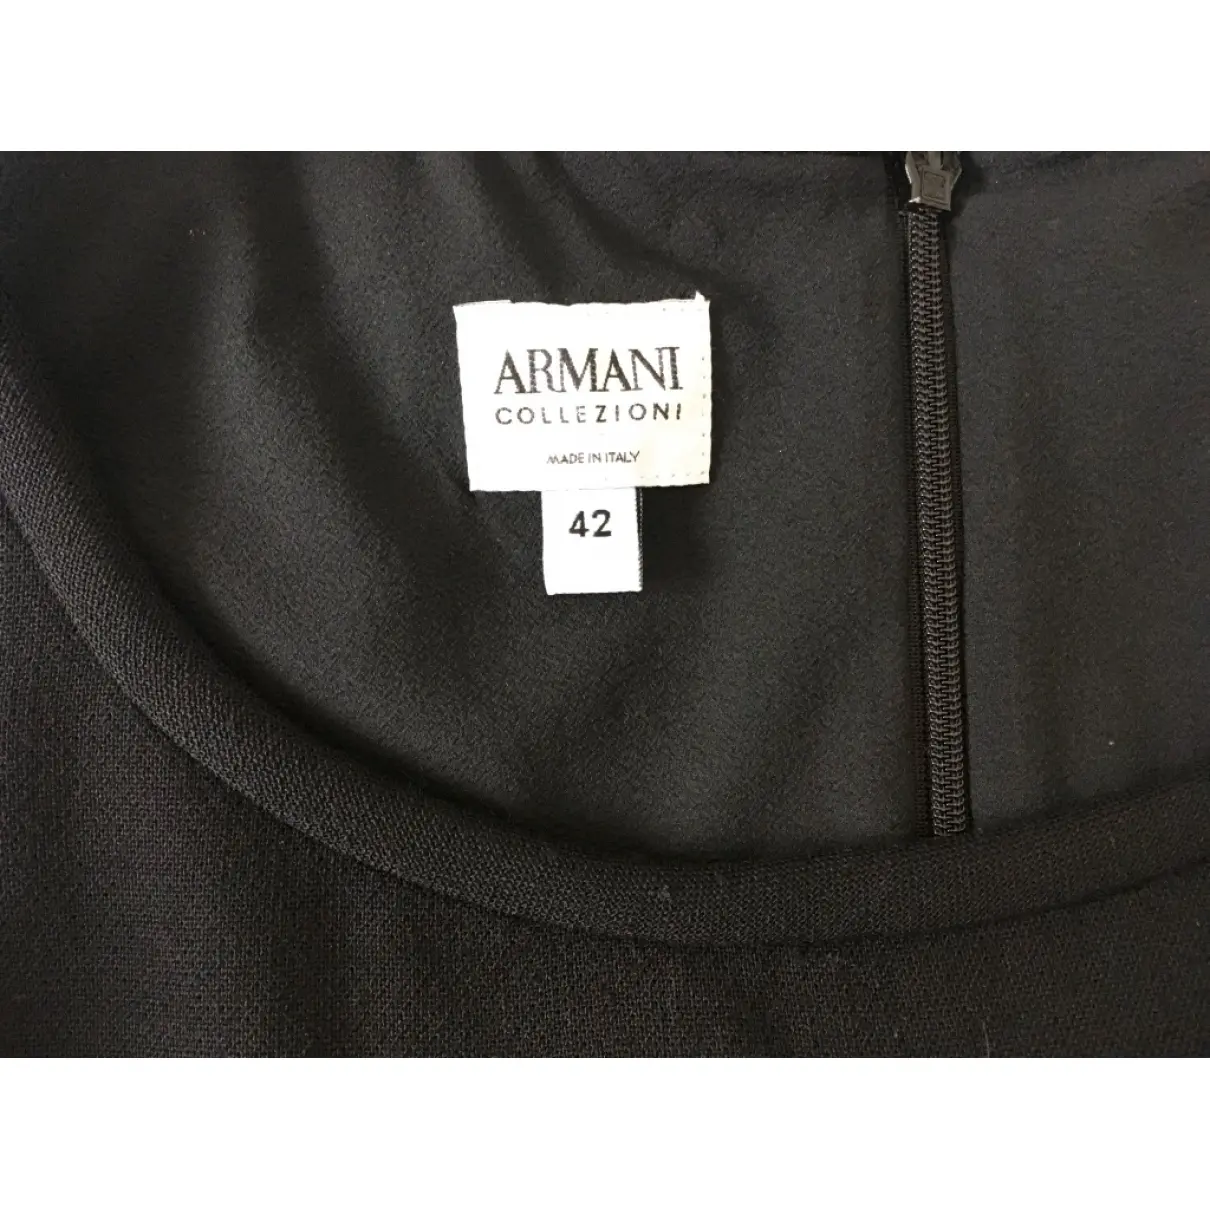 Buy Armani Collezioni Wool maxi dress online